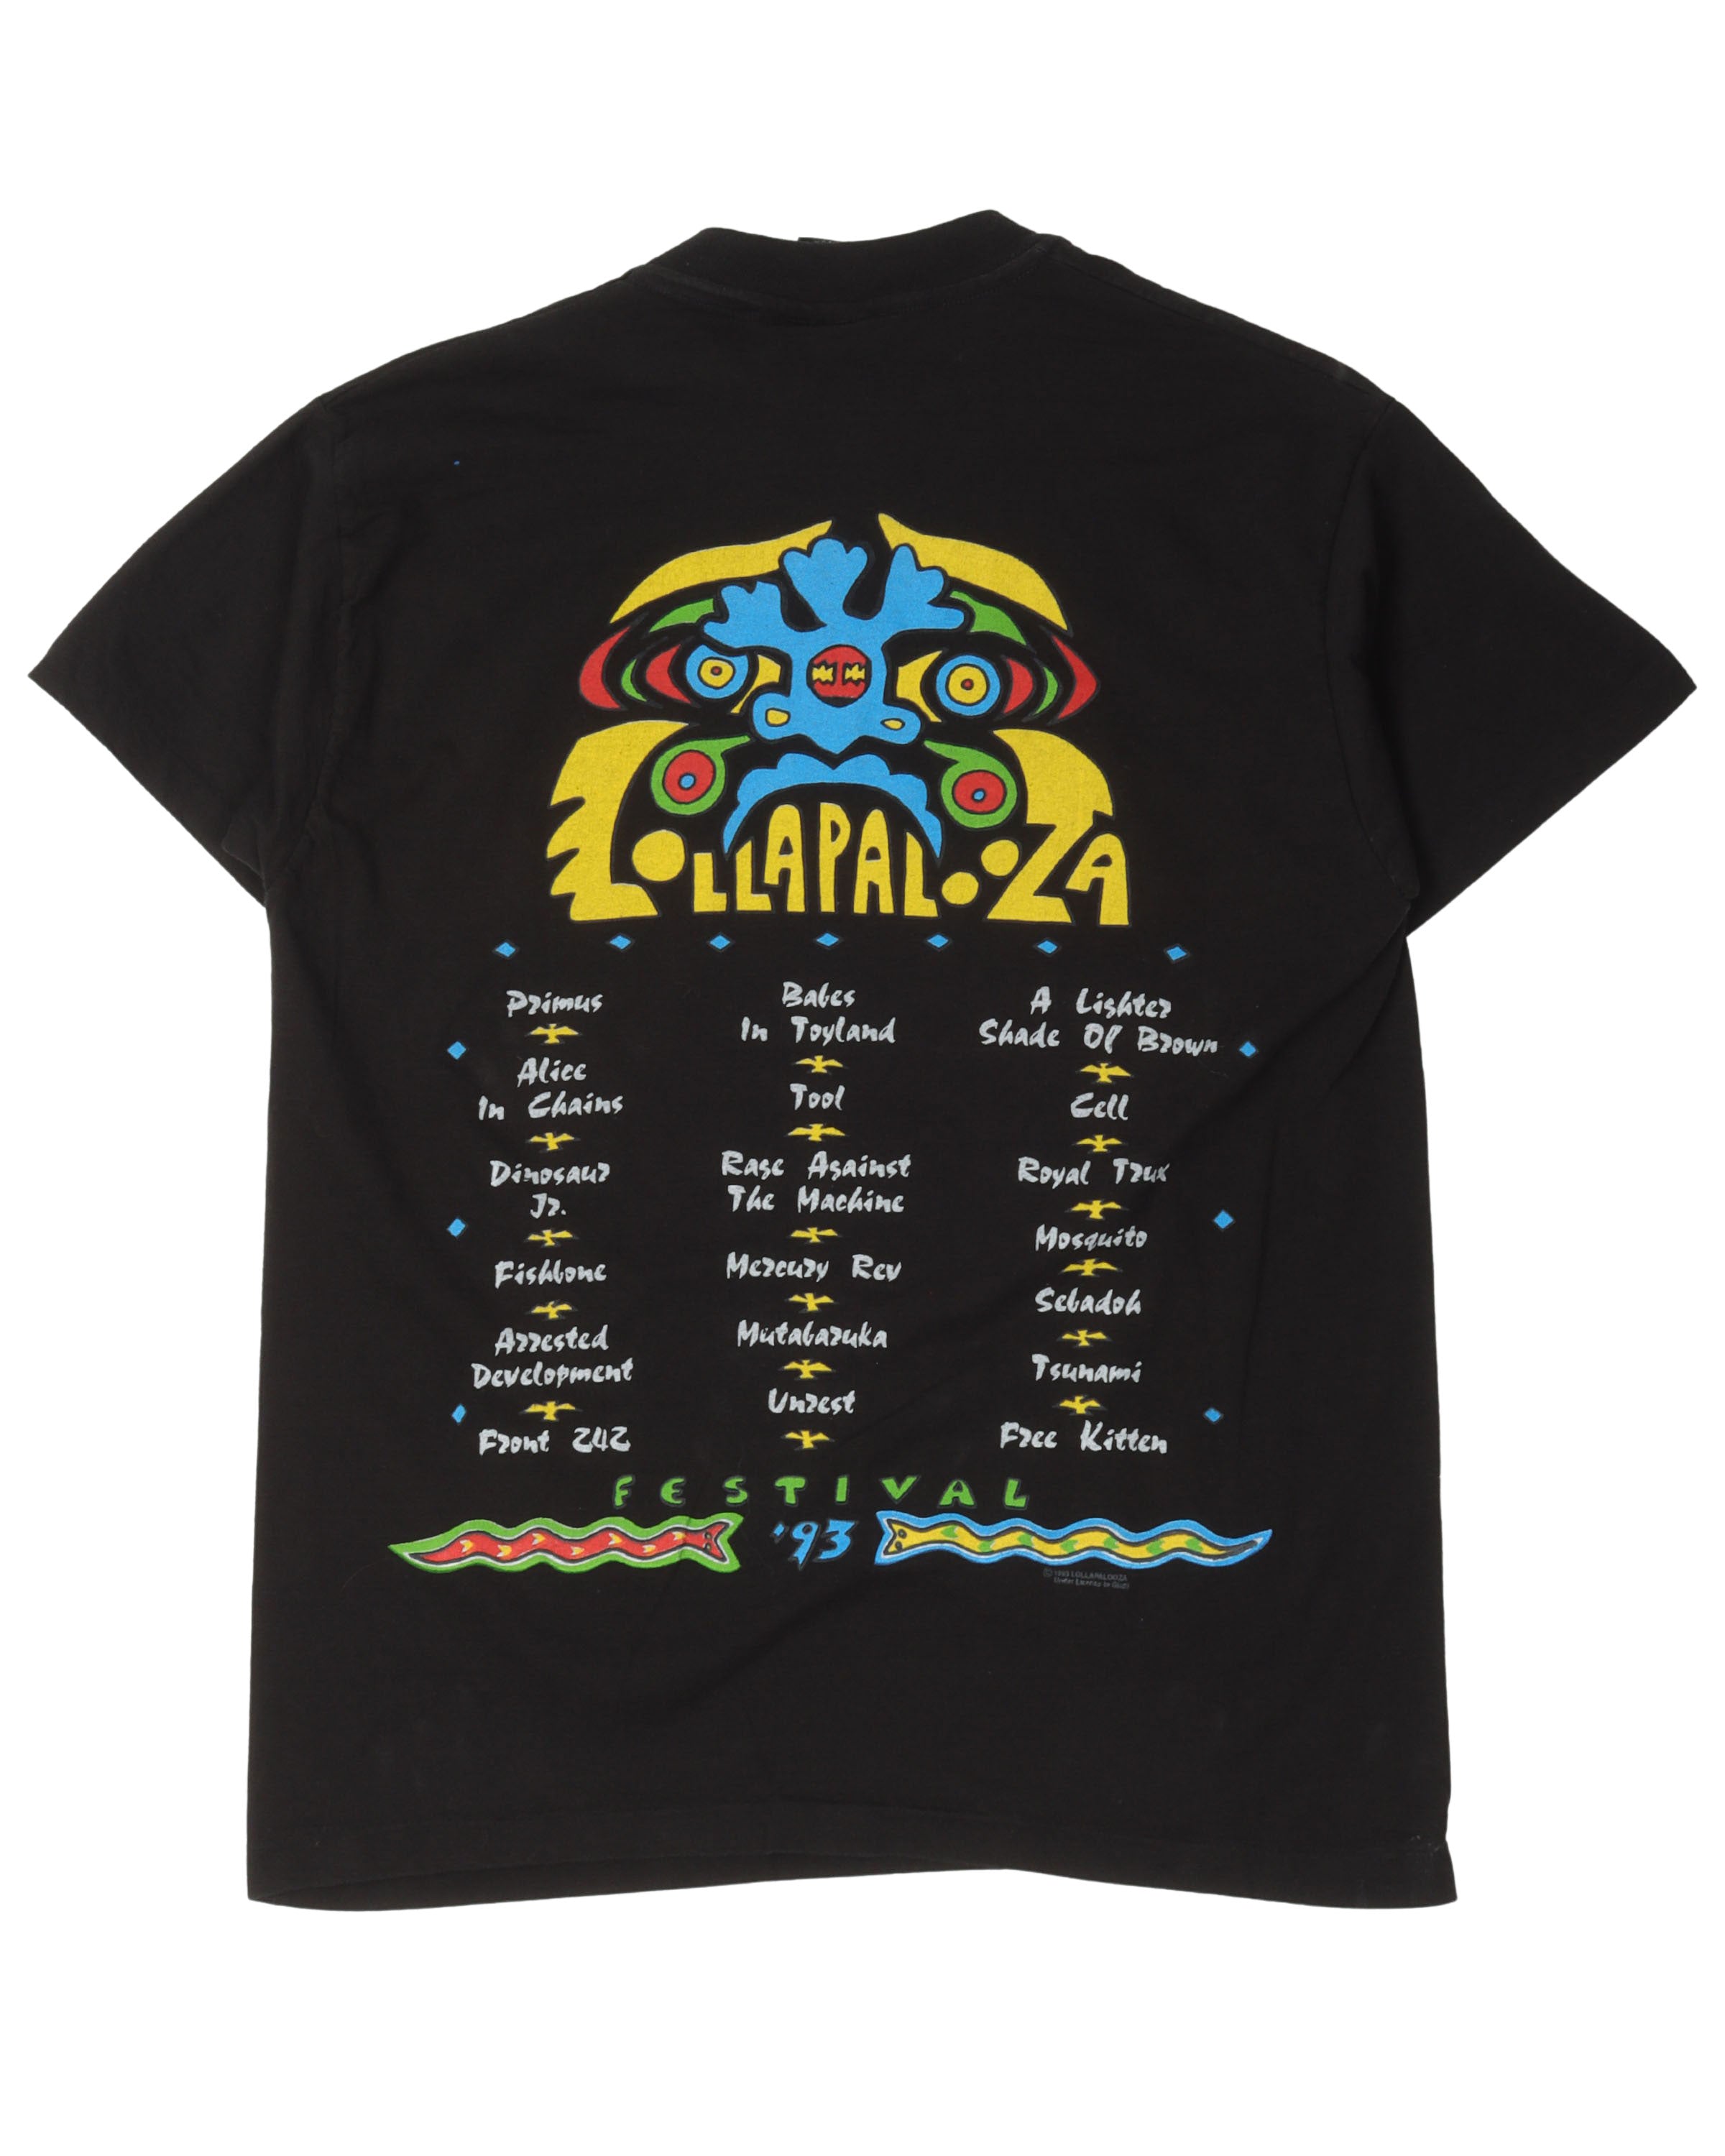 Lollapalooza 1993 T-Shirt